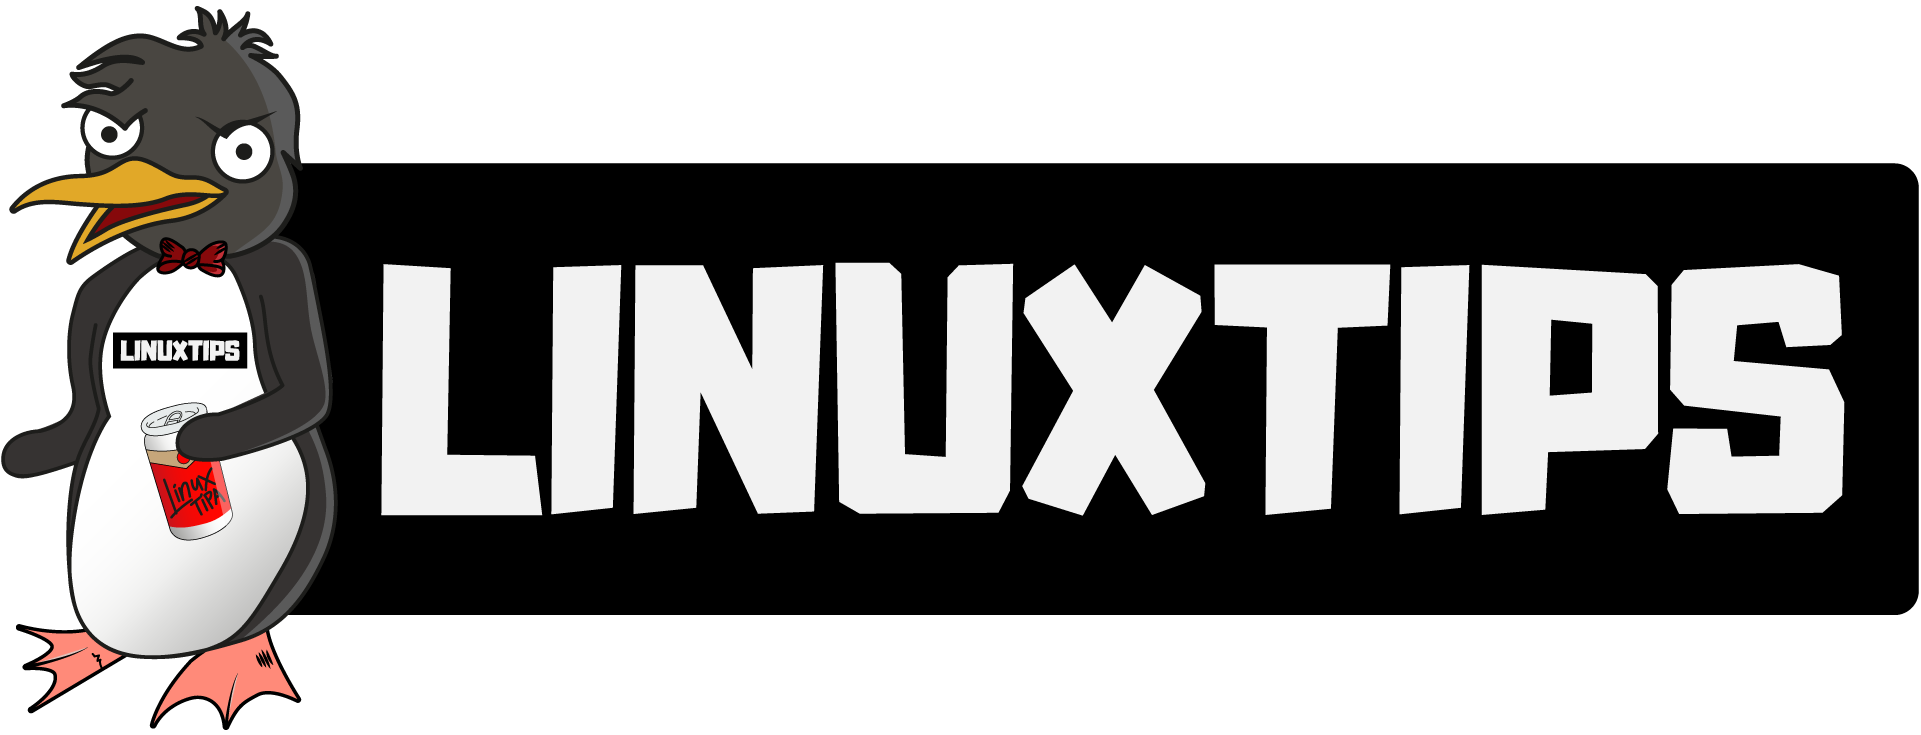 LINUXtips logo